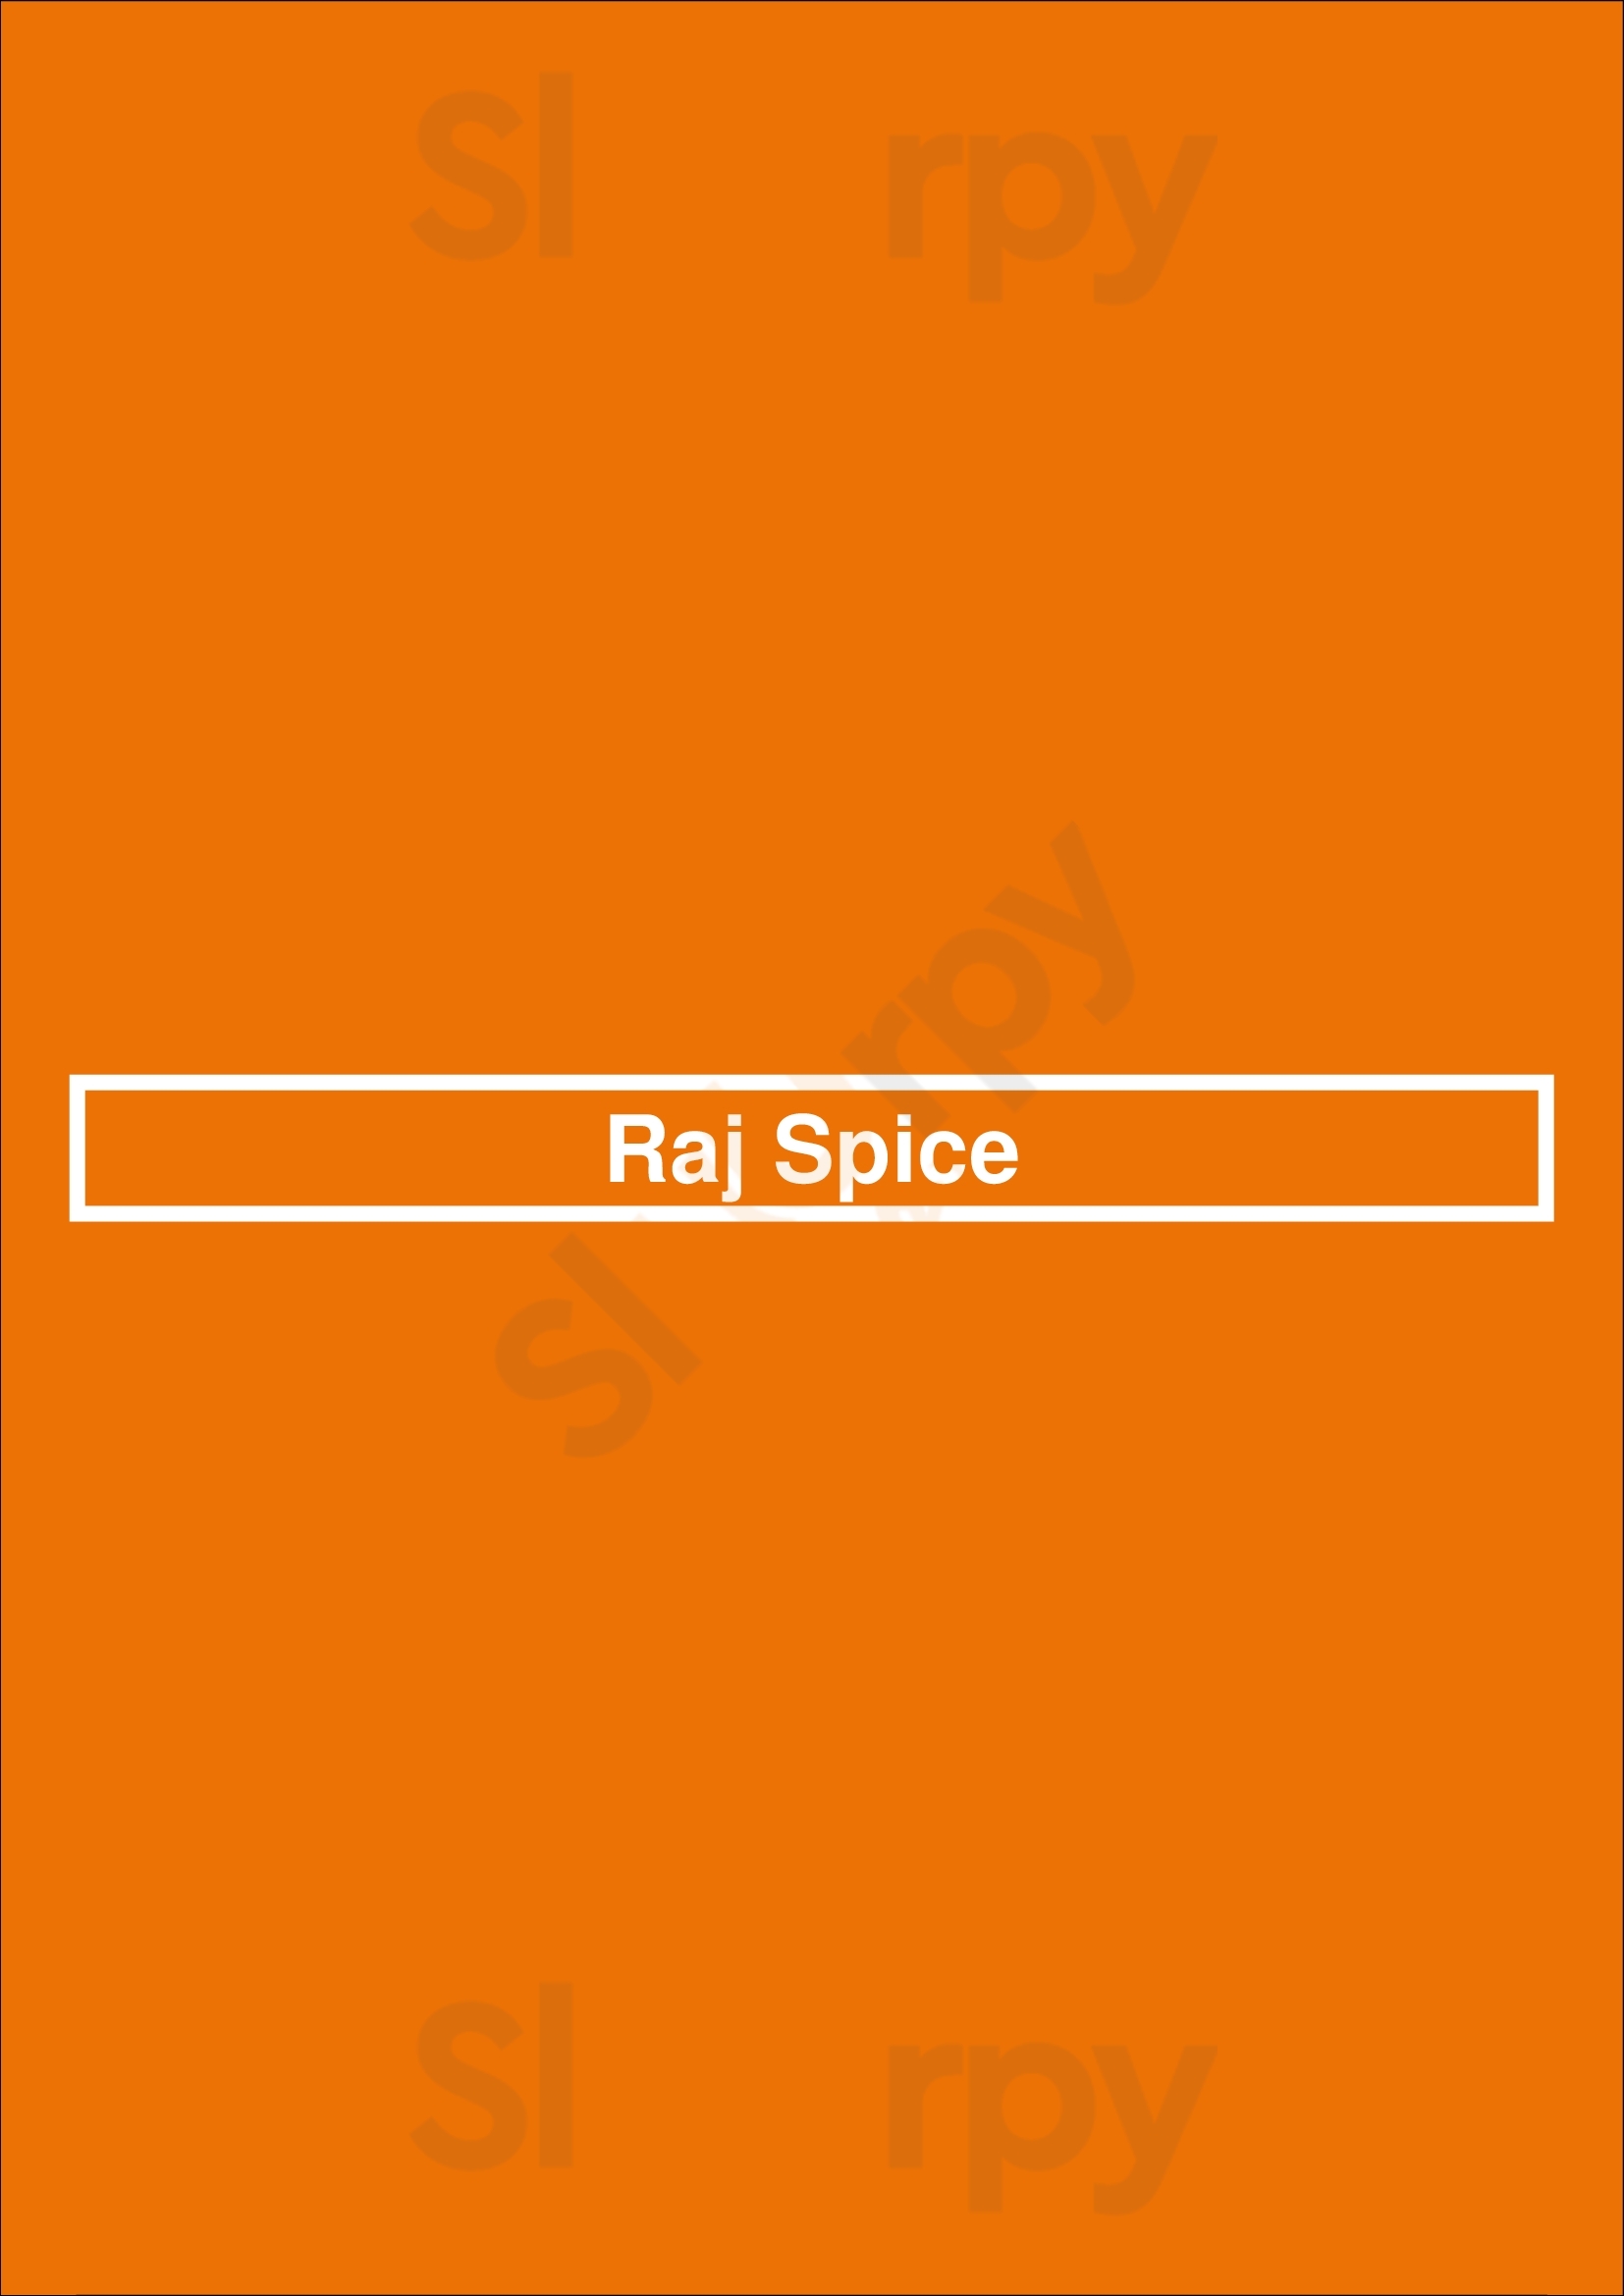 The Raj Spice Rowley Regis Menu - 1